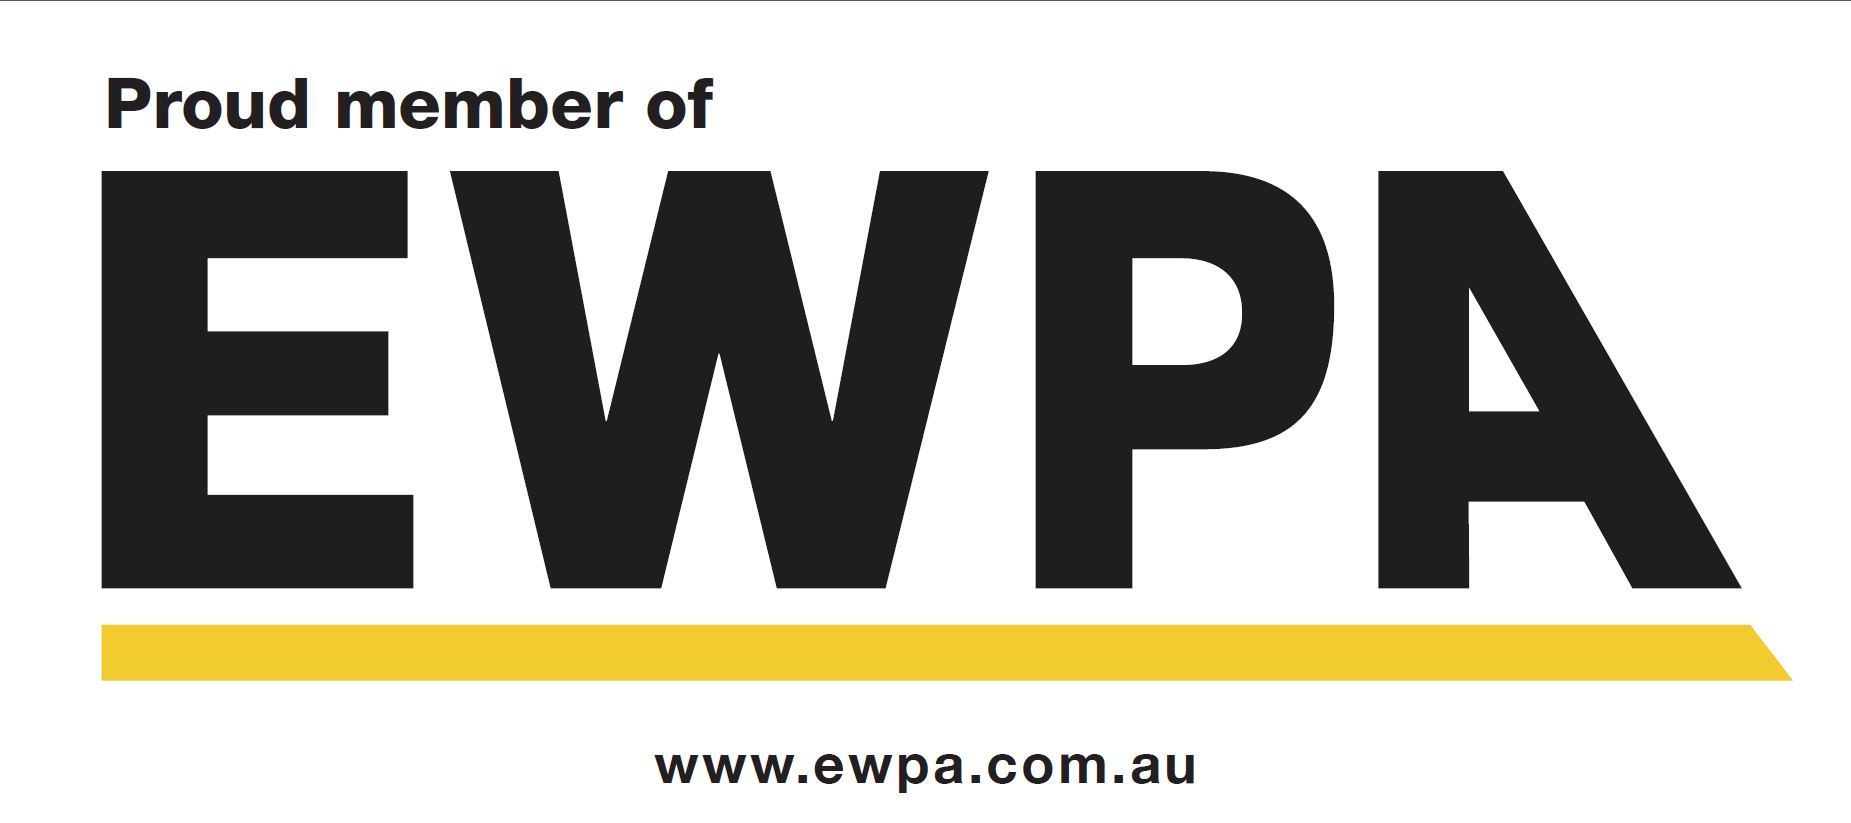 EWPA Proud Member logo